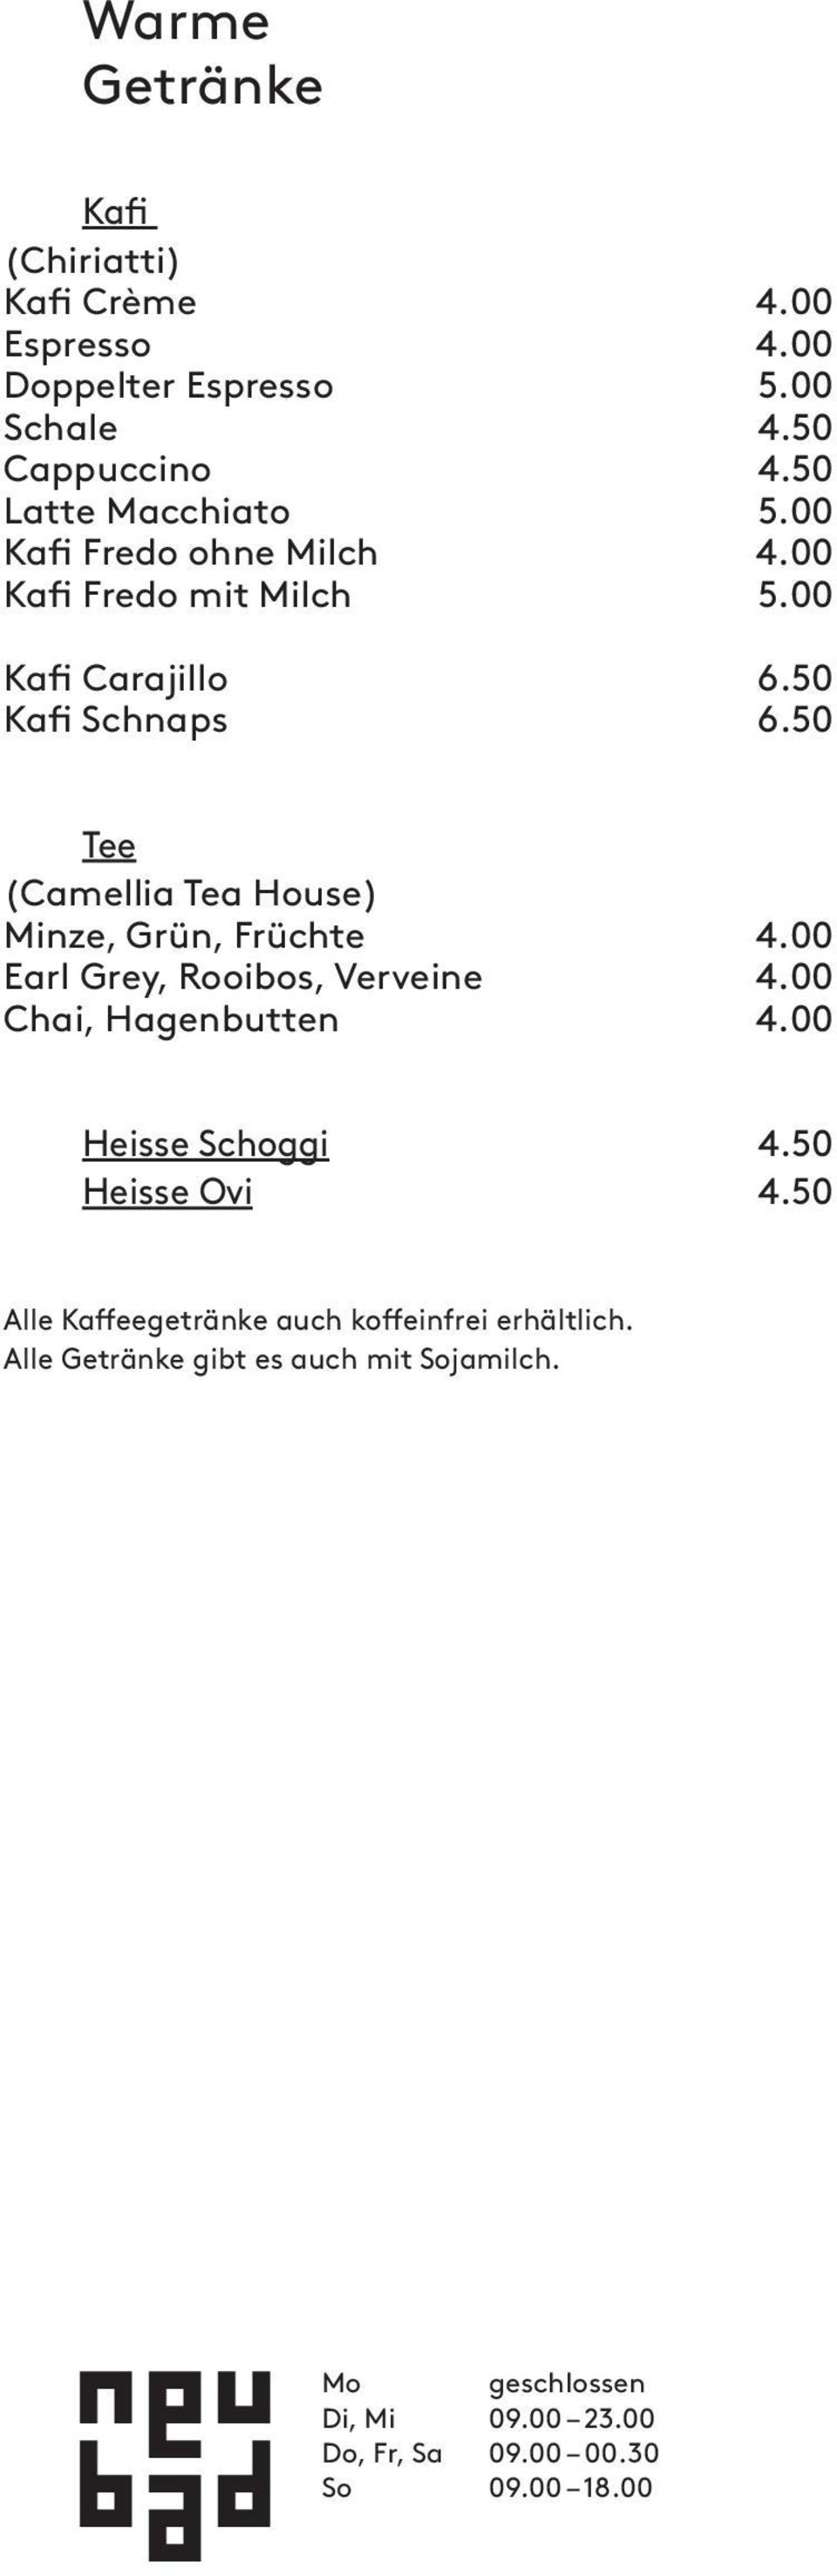 50 Tee (Camellia Tea House) Minze, Grün, Früchte 4.00 Earl Grey, Rooibos, Verveine 4.00 Chai, Hagenbutten 4.